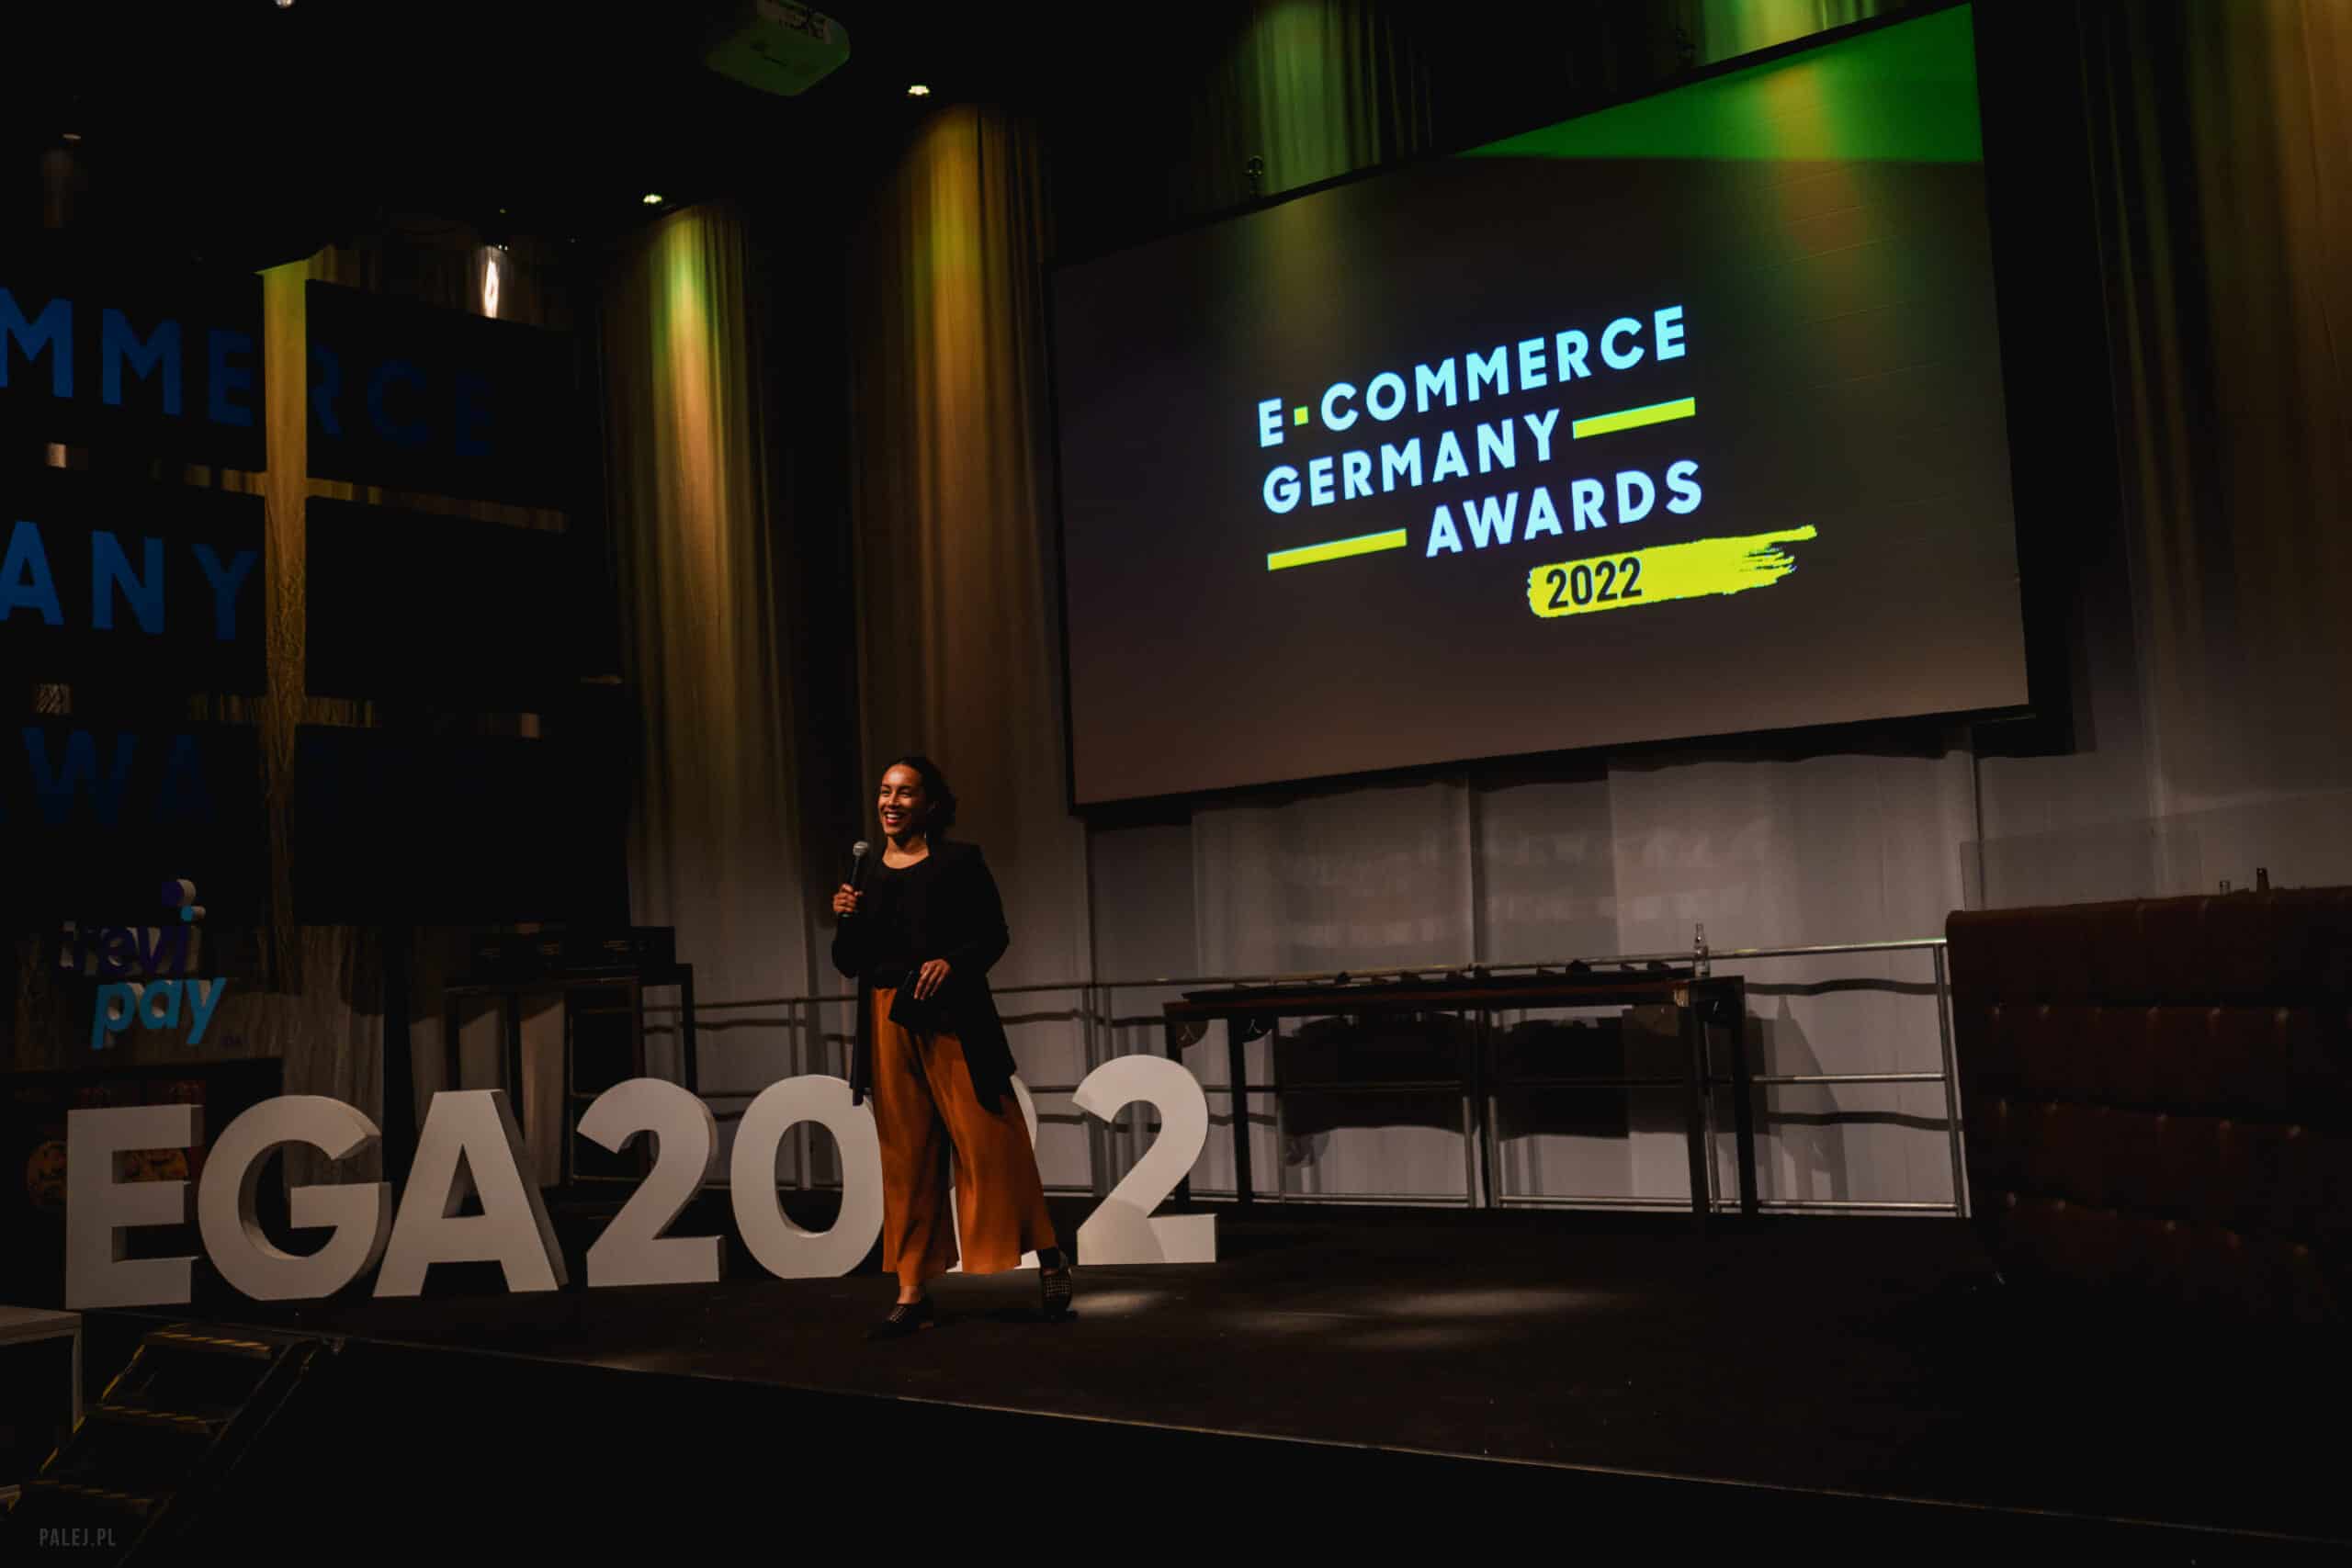 The E-commerce Germany Awards 2023